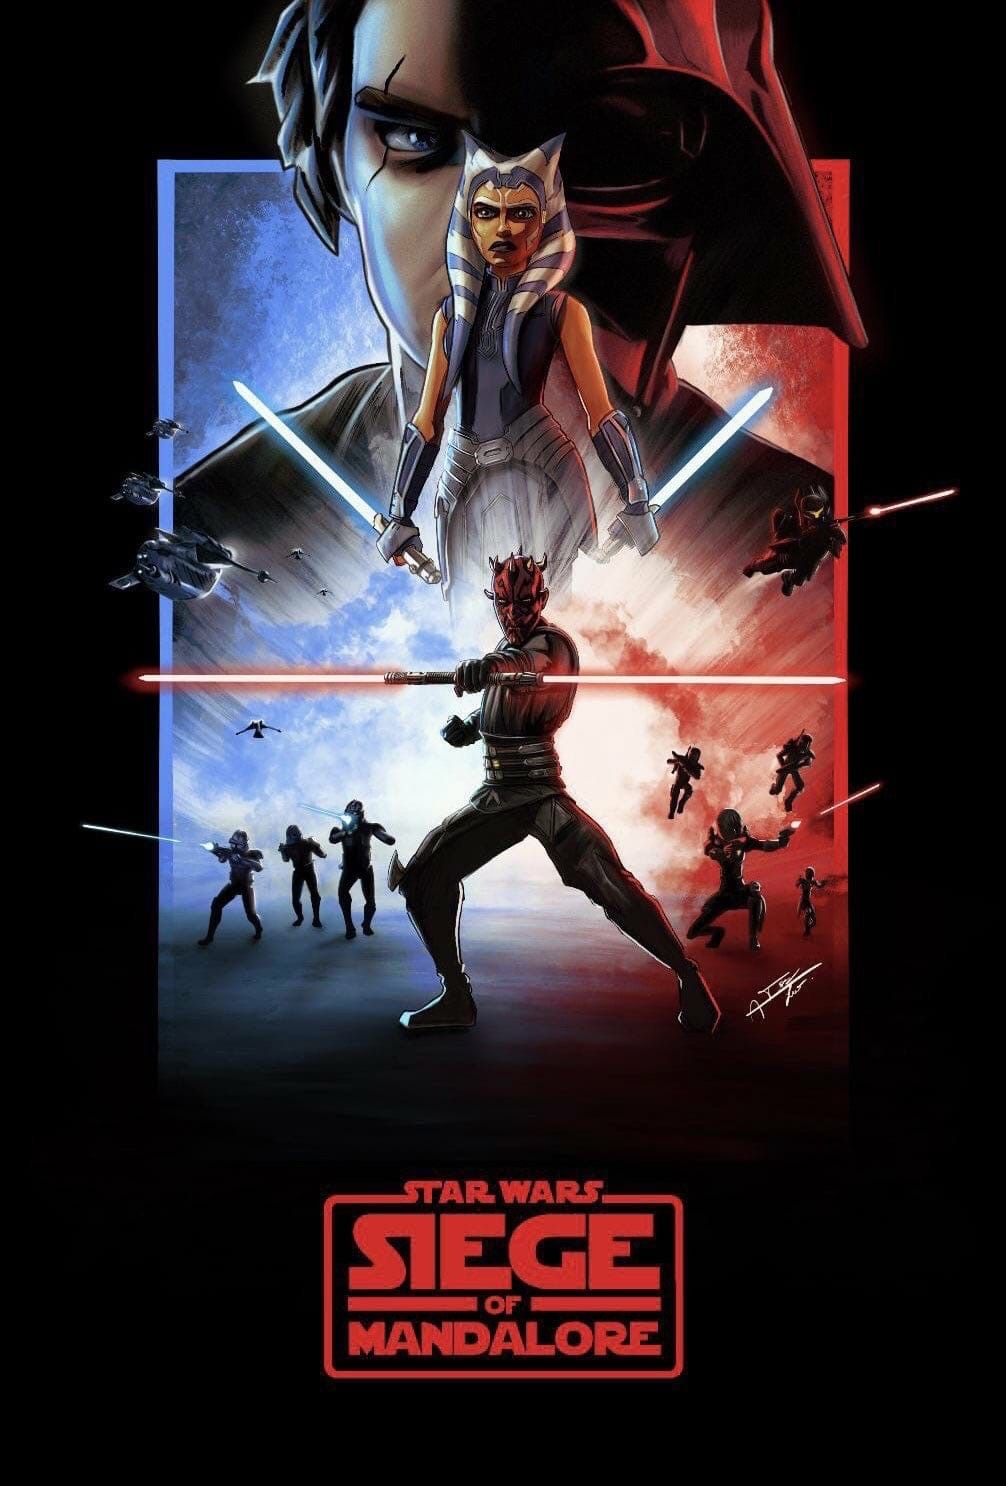 Siege of Mandalore / poster, season 7. Star wars painting, Star wars poster, Star wars geek